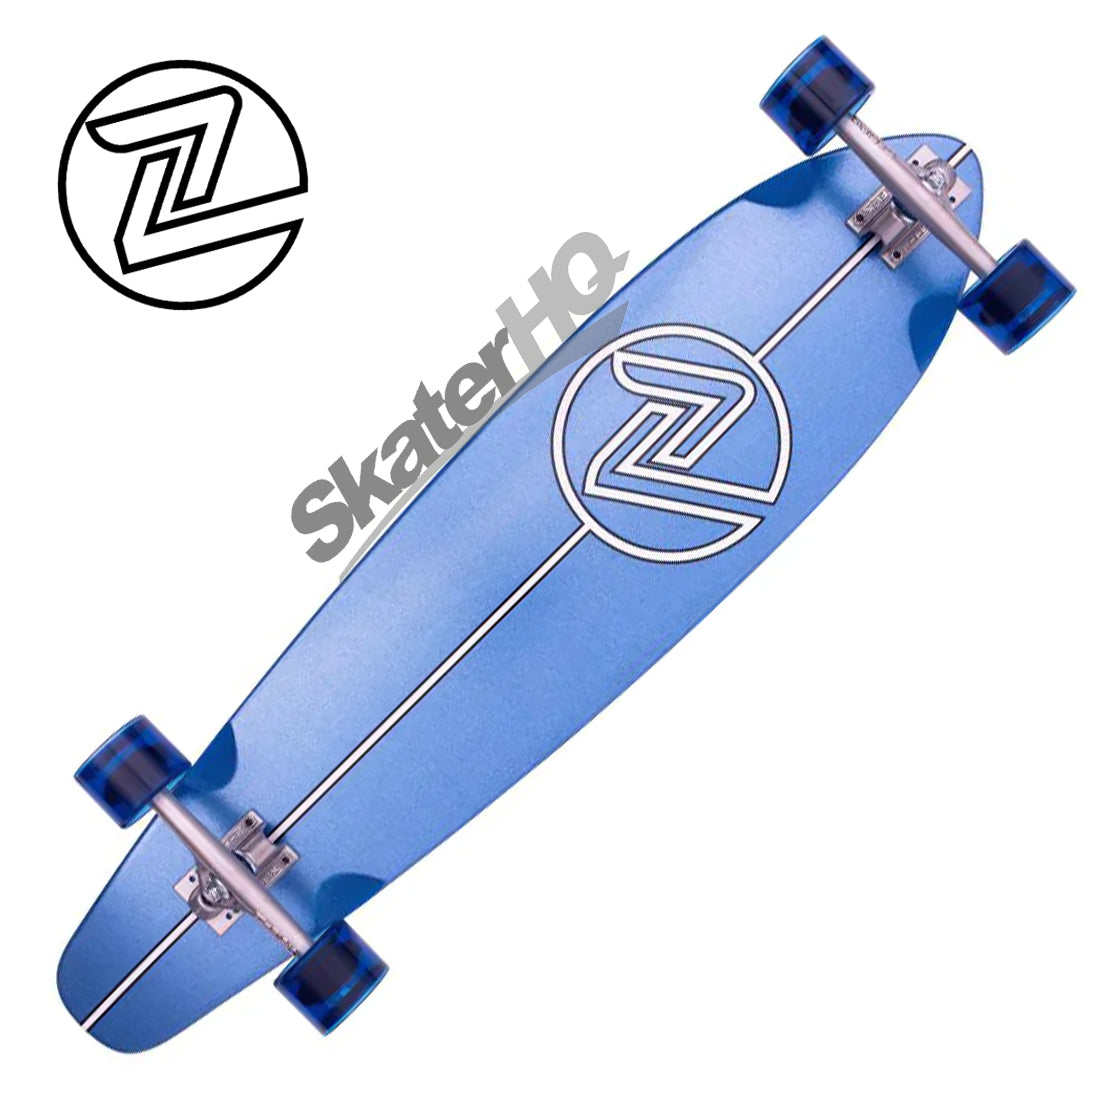 Z-Flex Jay Adams 38 Roundtail Complete - Blue Metal Flake Skateboard Completes Longboards